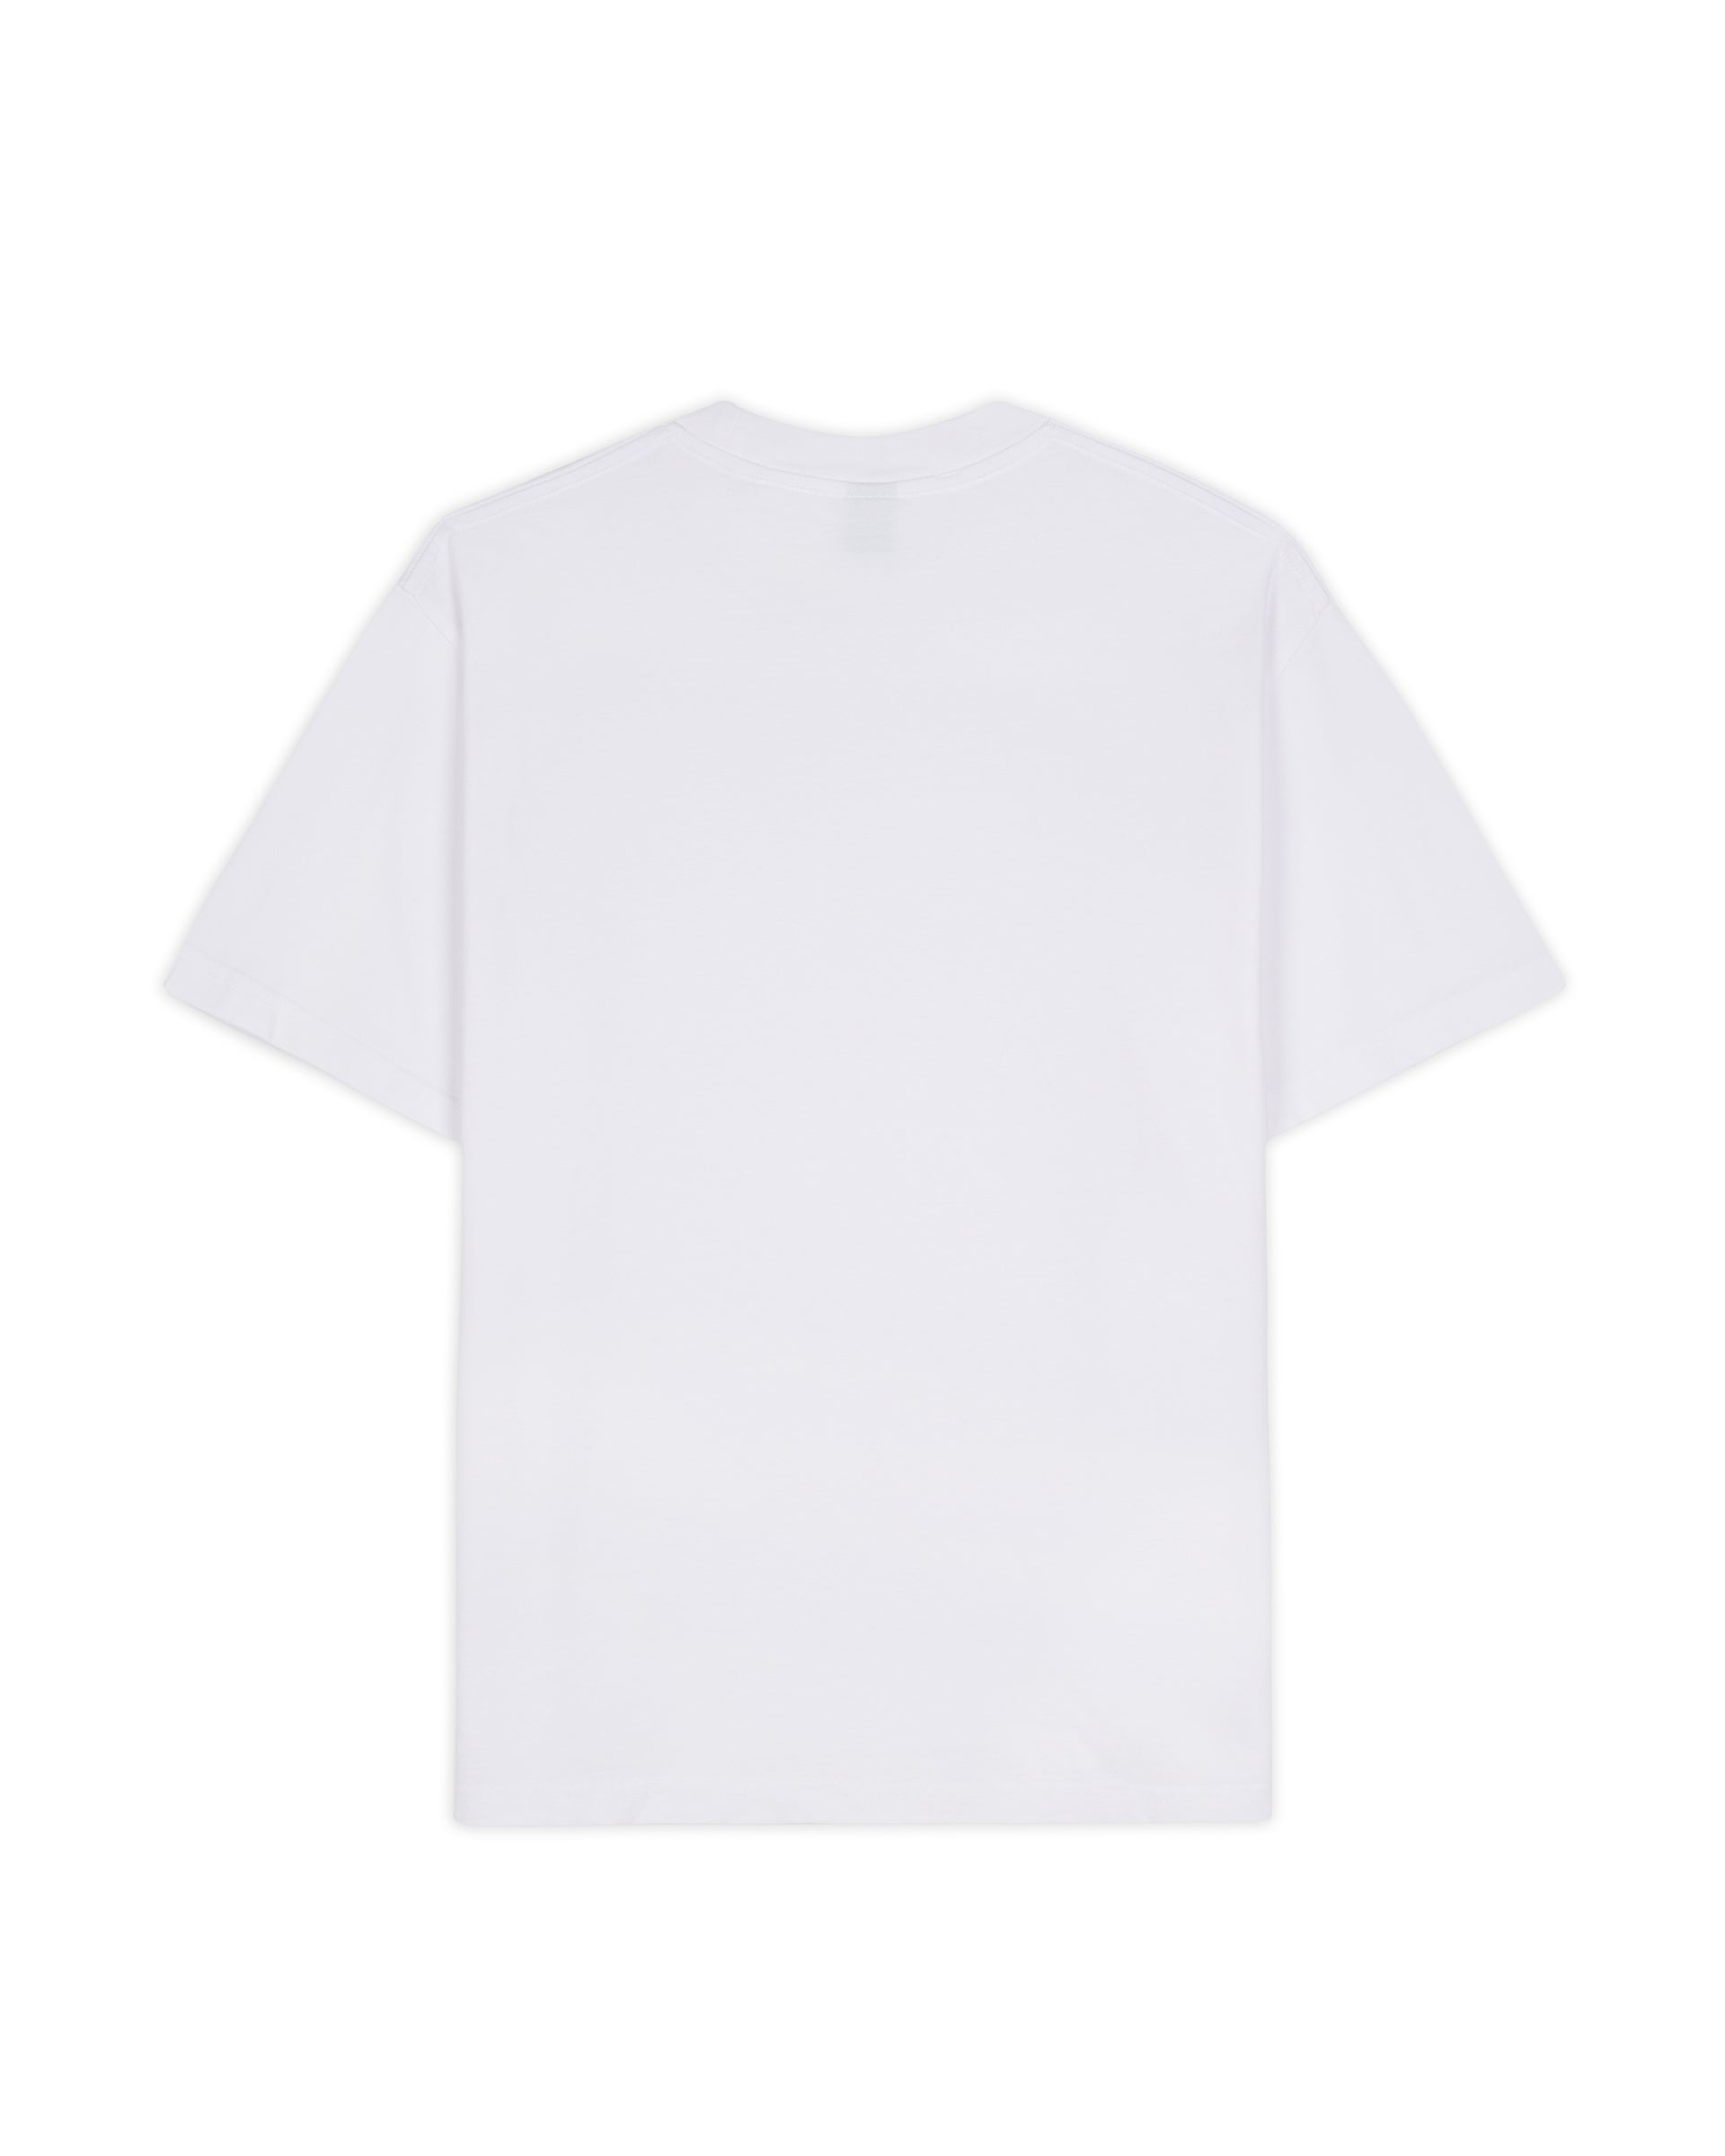 Brain Dead x Devo Booji DNA T-Shirt - White